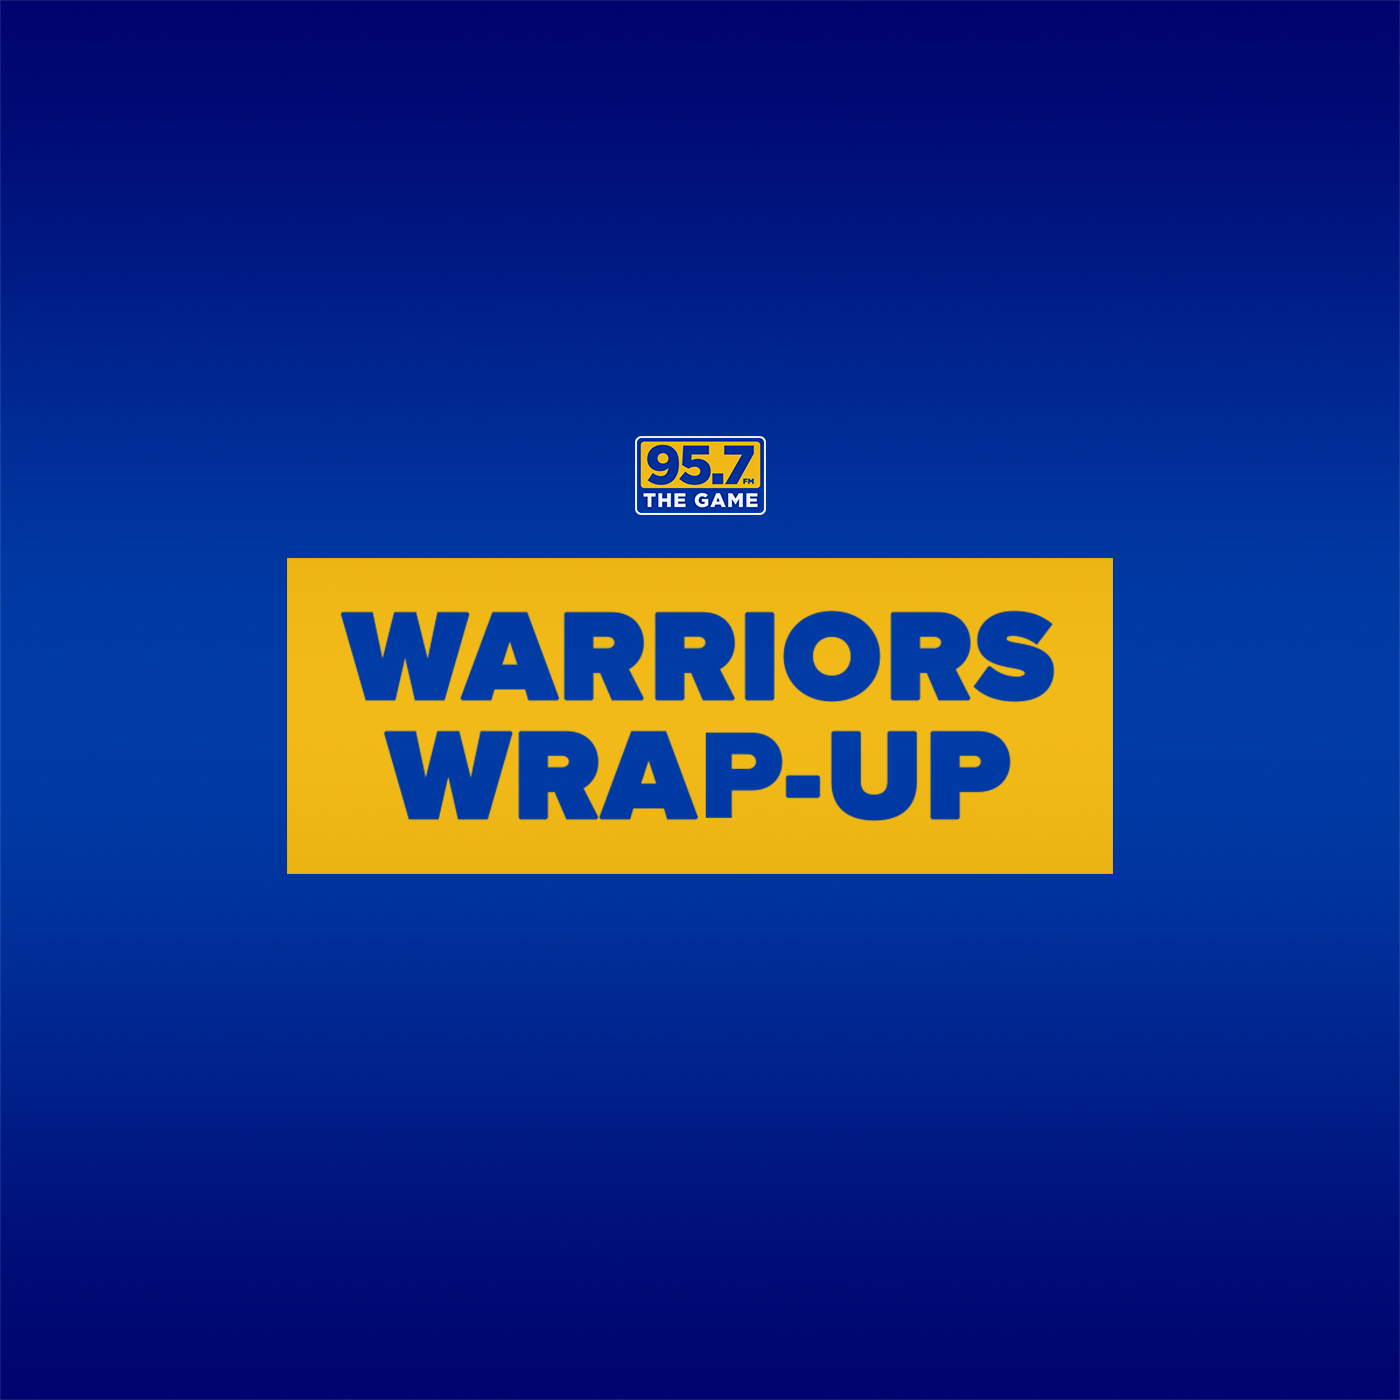 Warriors snap 5-game losing streak vs. Clippers